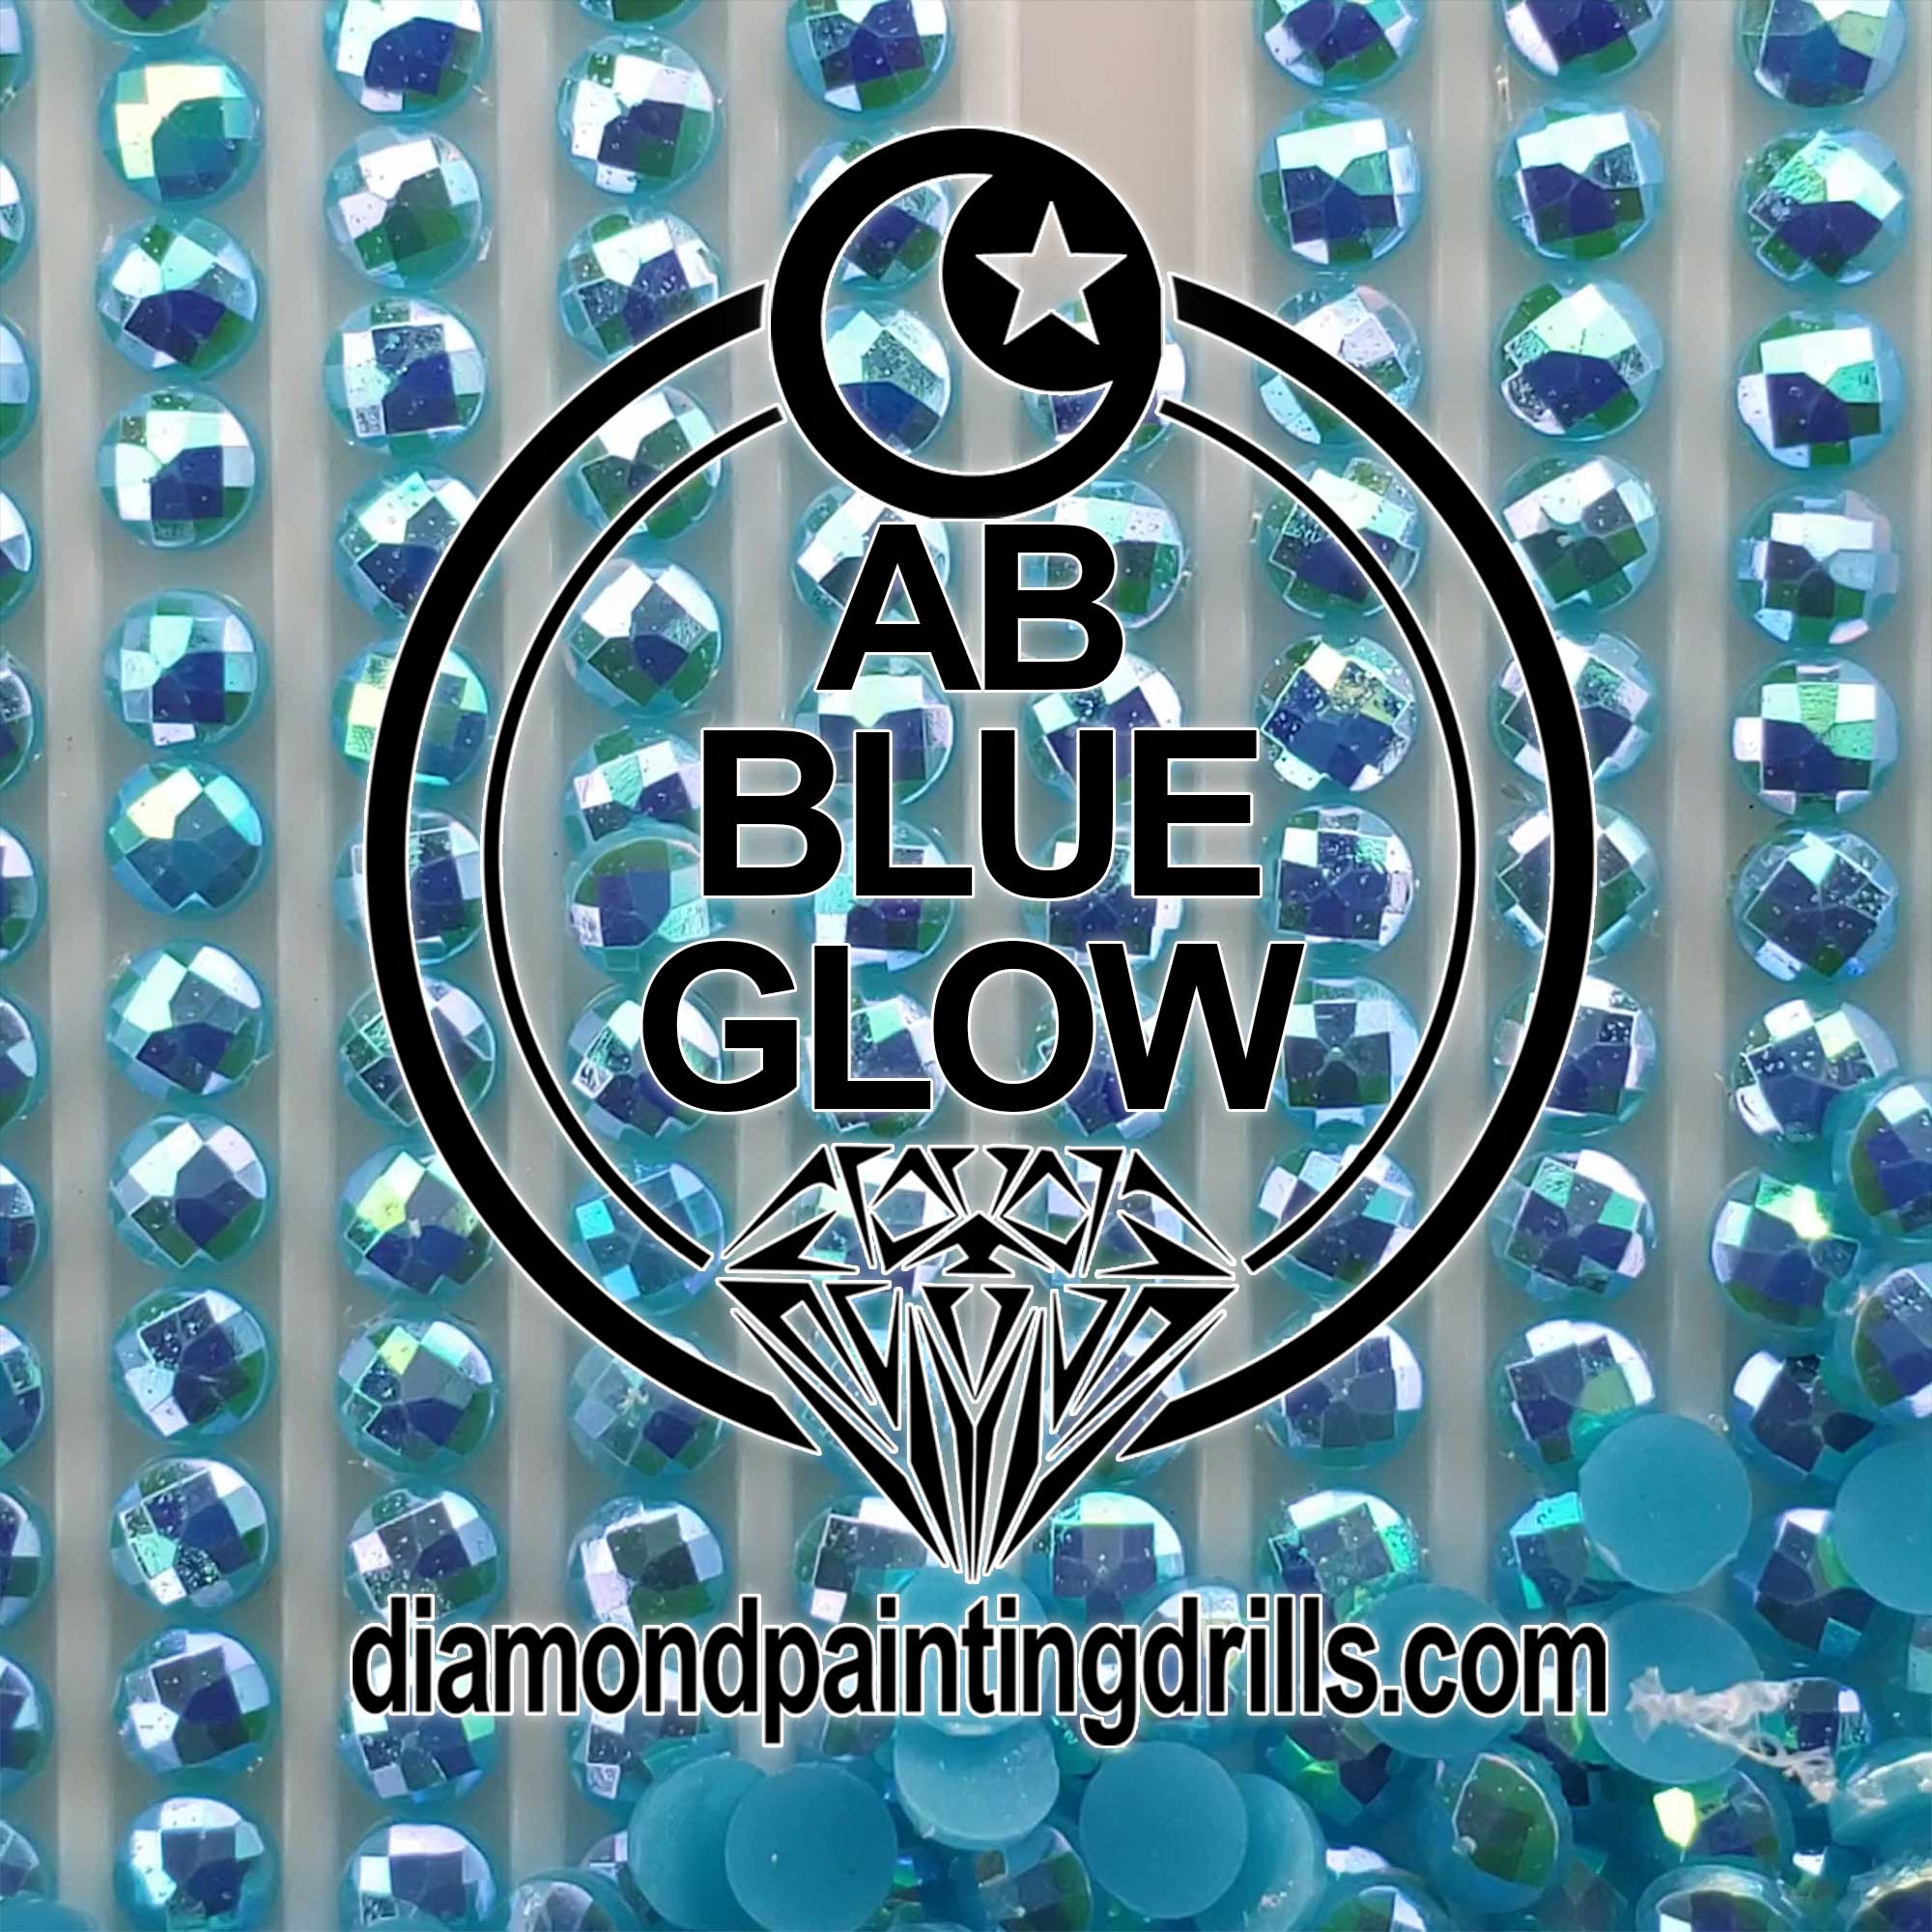 Blue AB Glow in the Dark Round Drills - Diamond Painting Drills